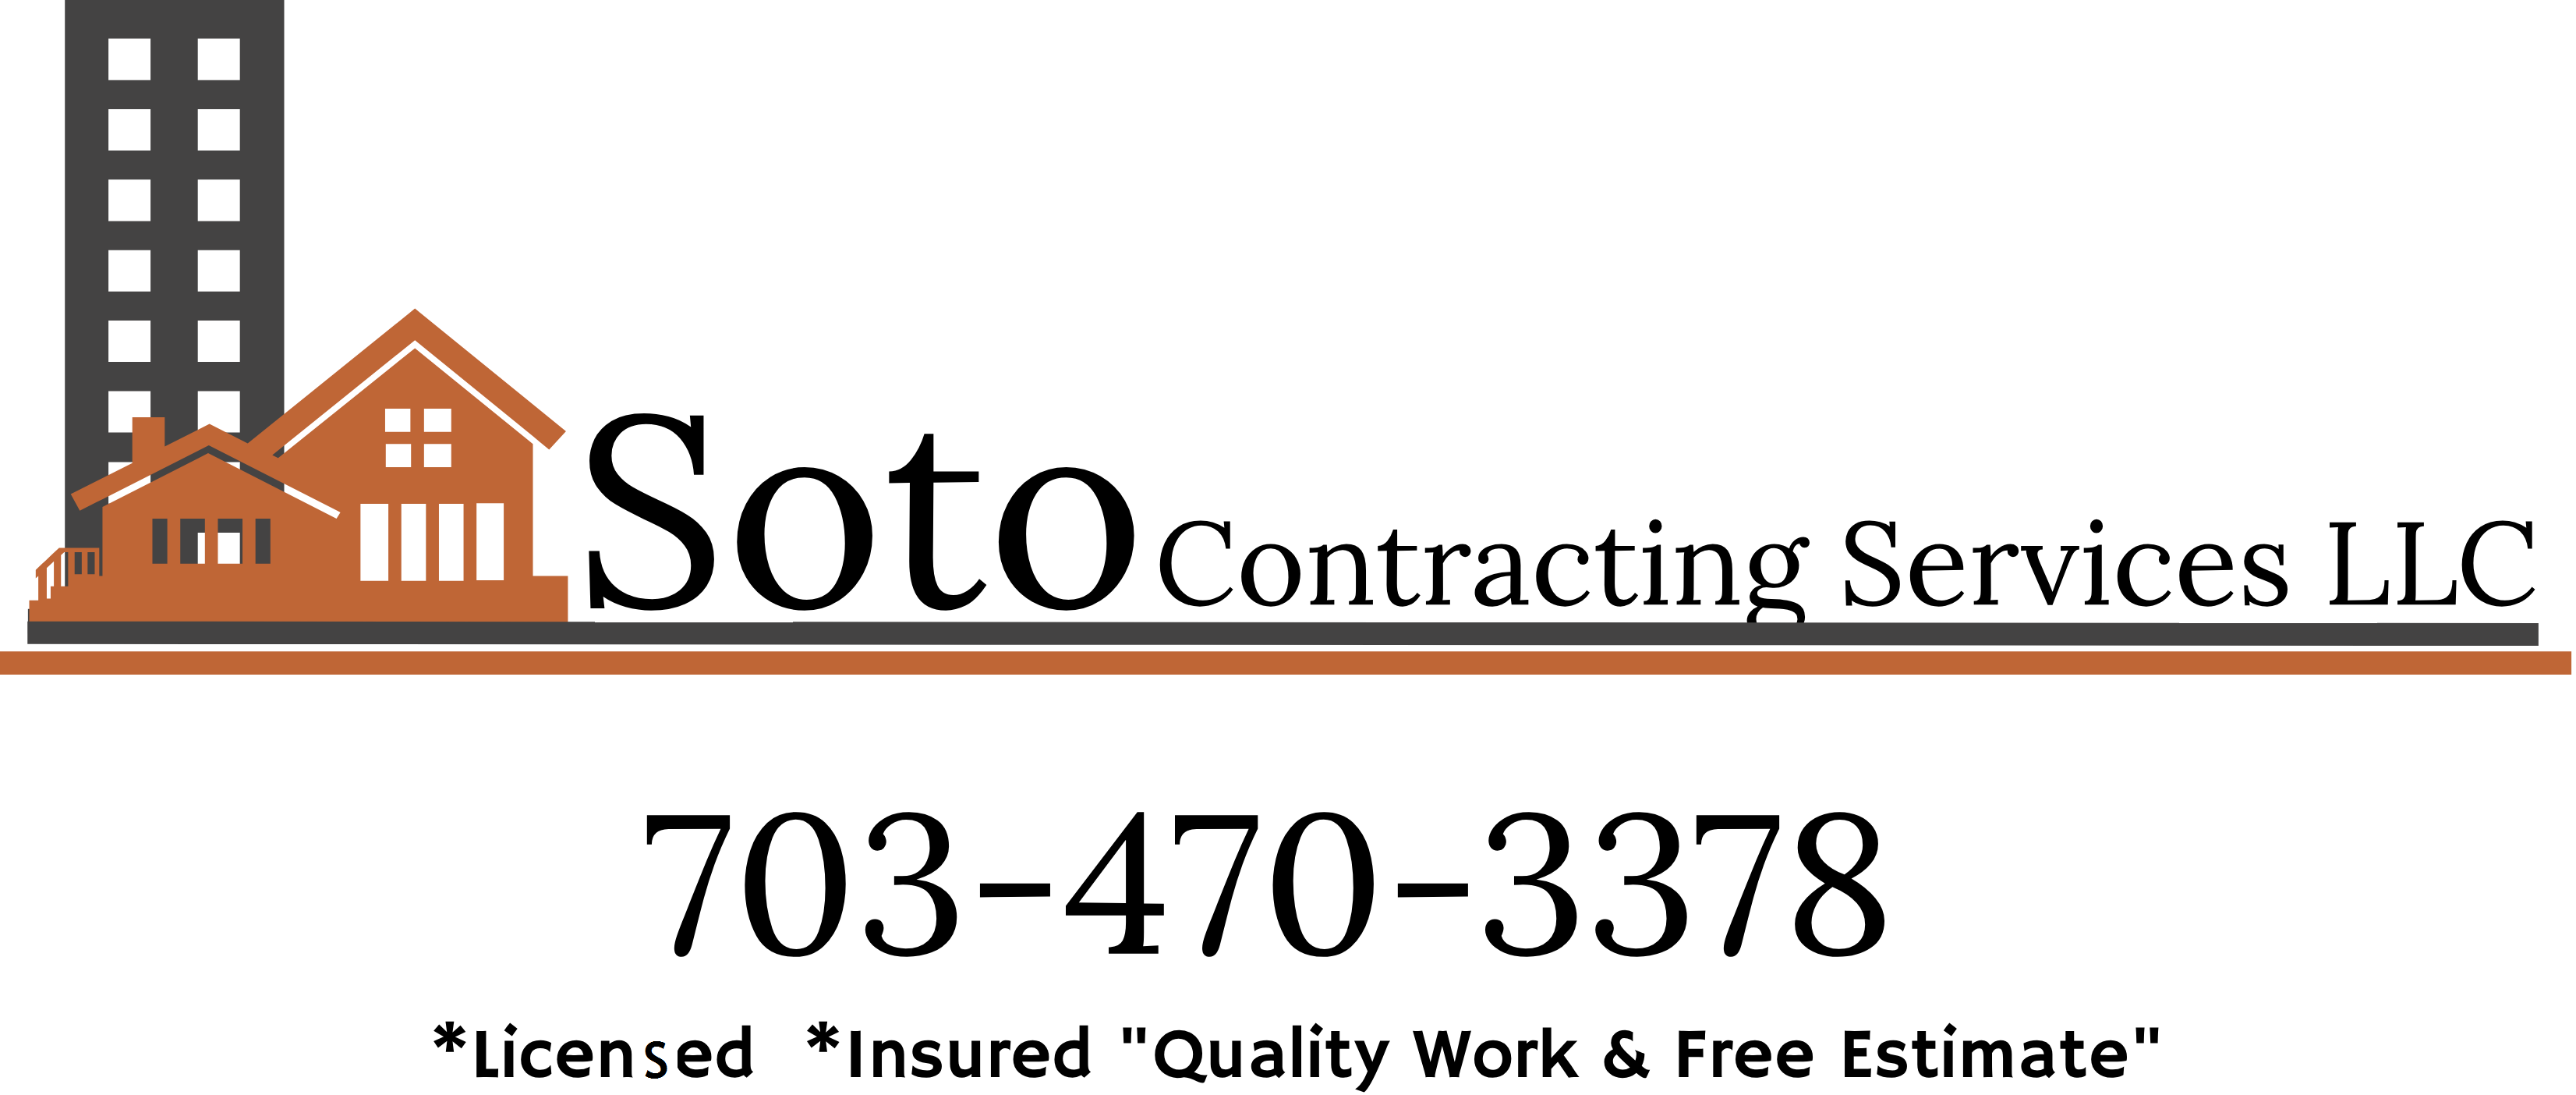 Soto Contracting Services, LLC Logo